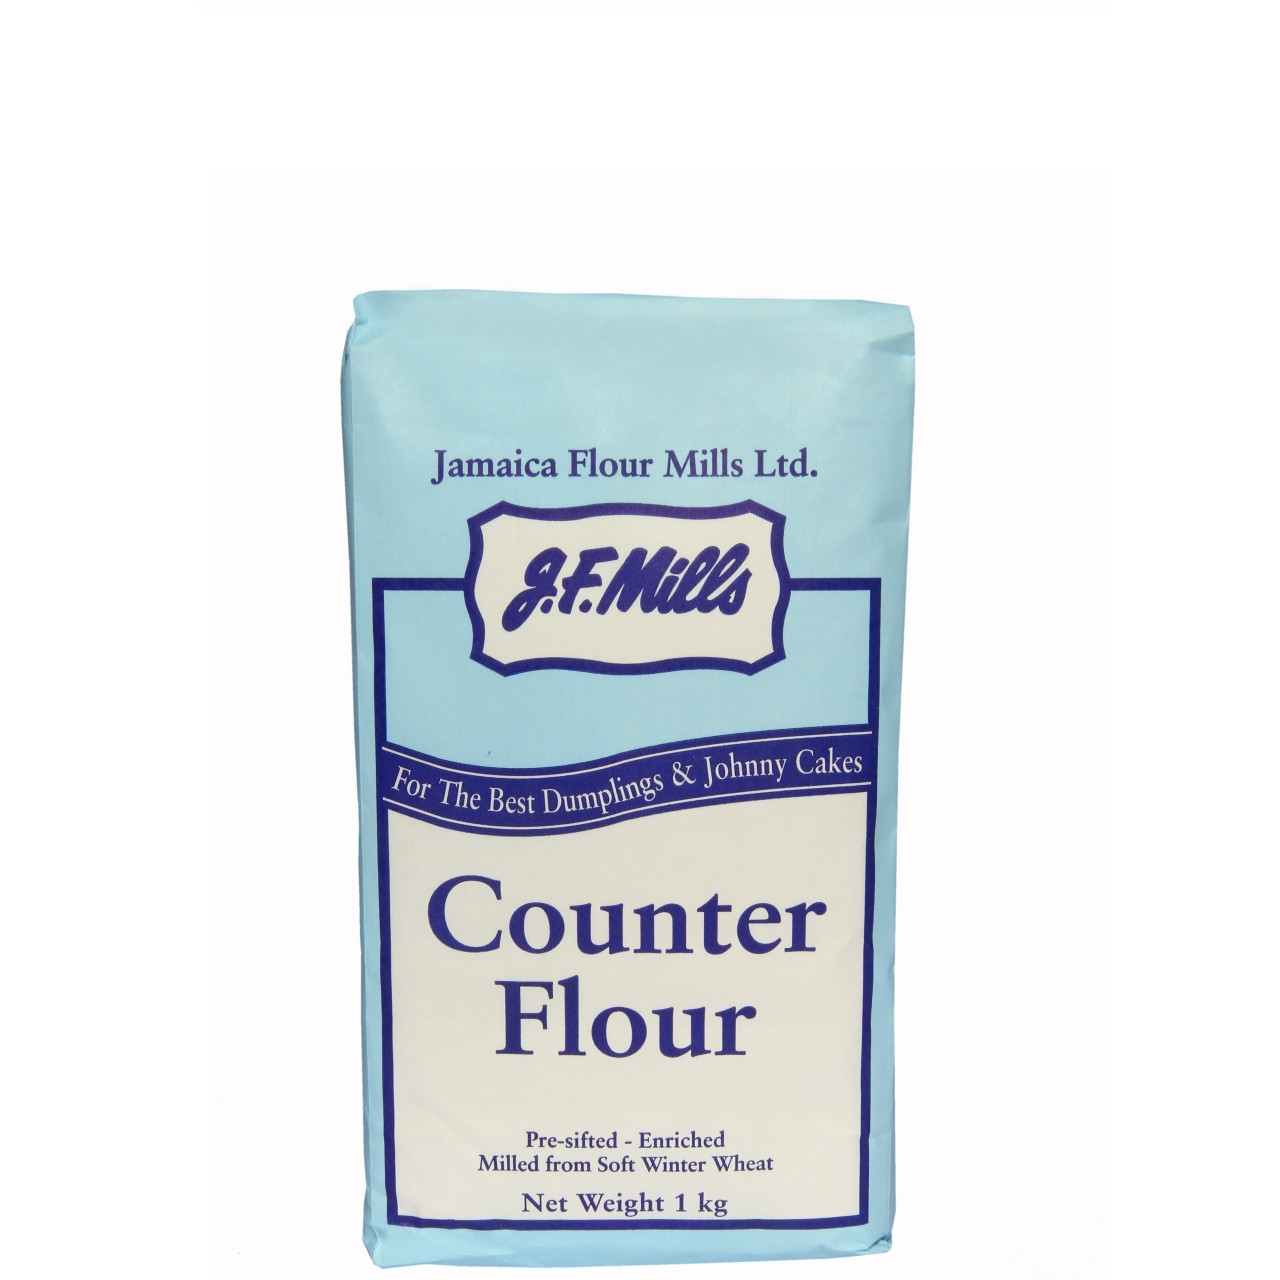 G.F.Mills Counter Flour 1kg